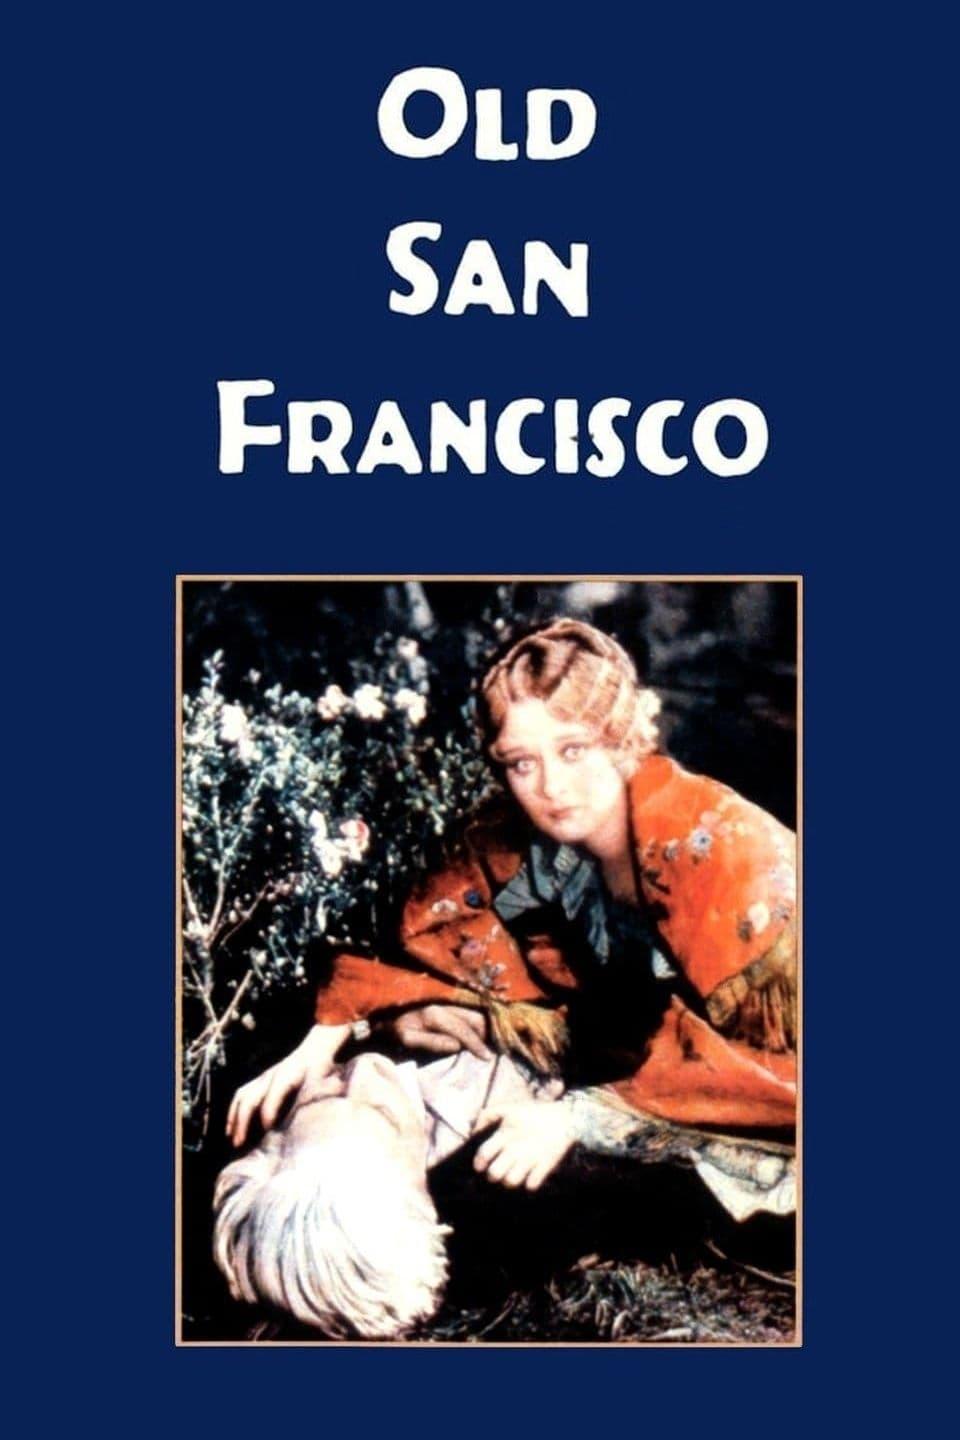 Old San Francisco poster